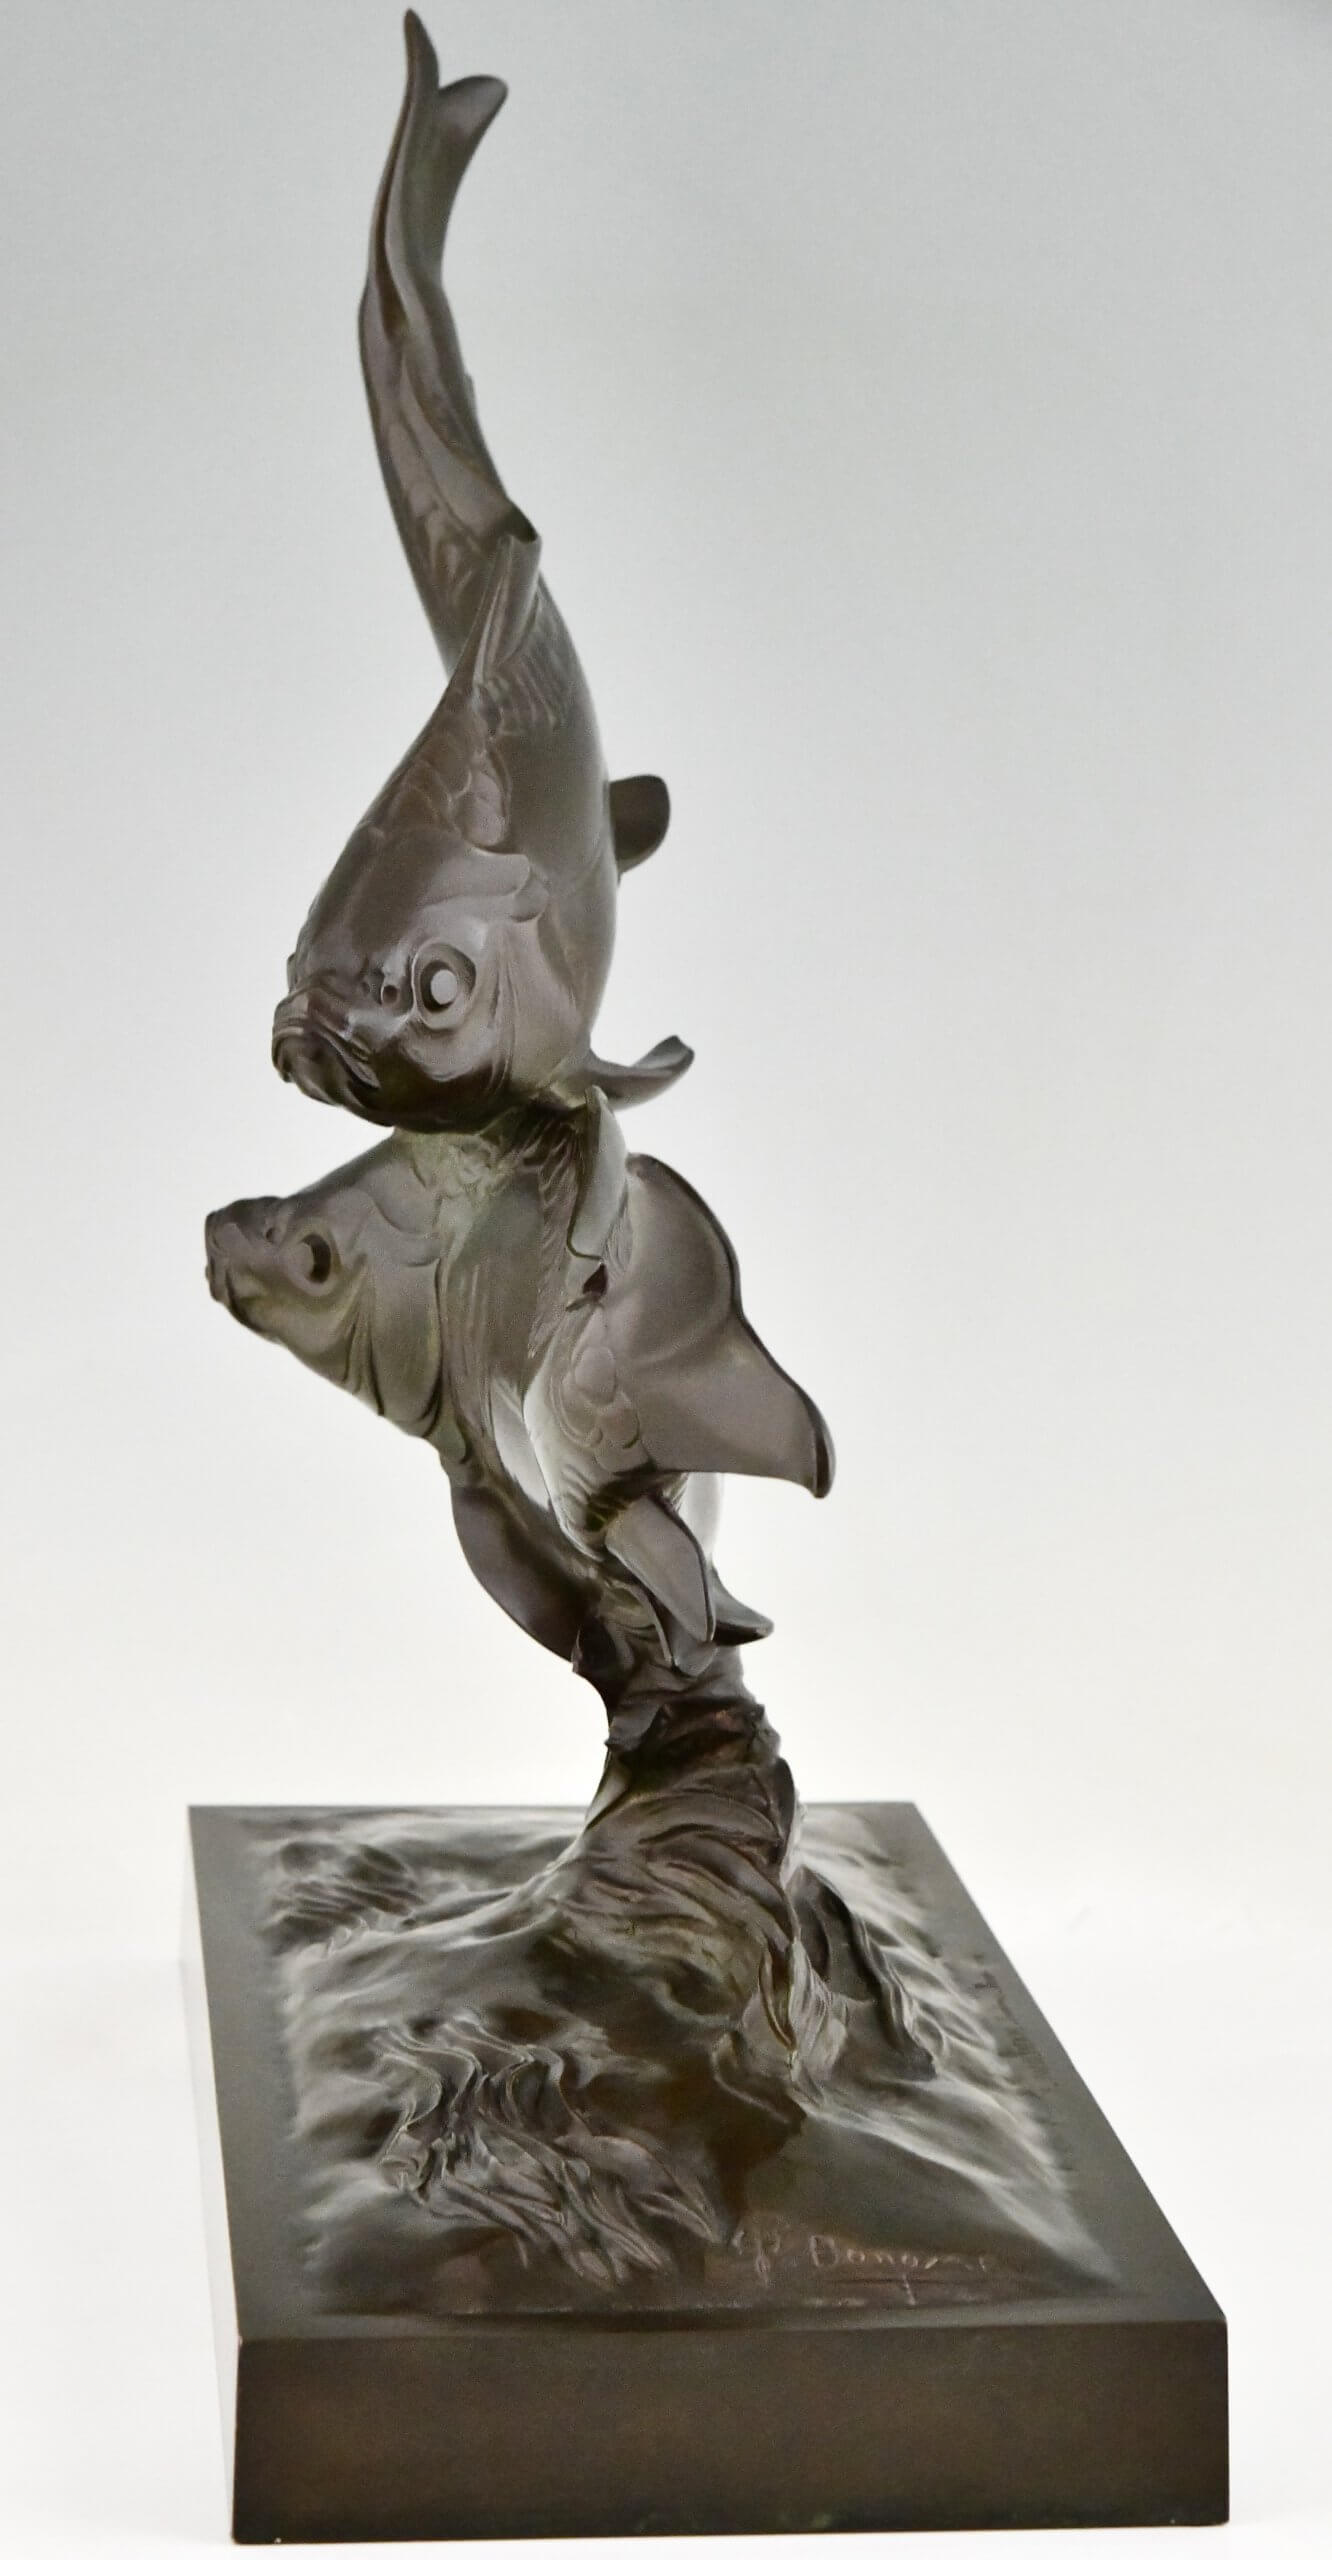 Art Deco bronze sculpture of two carp fish.